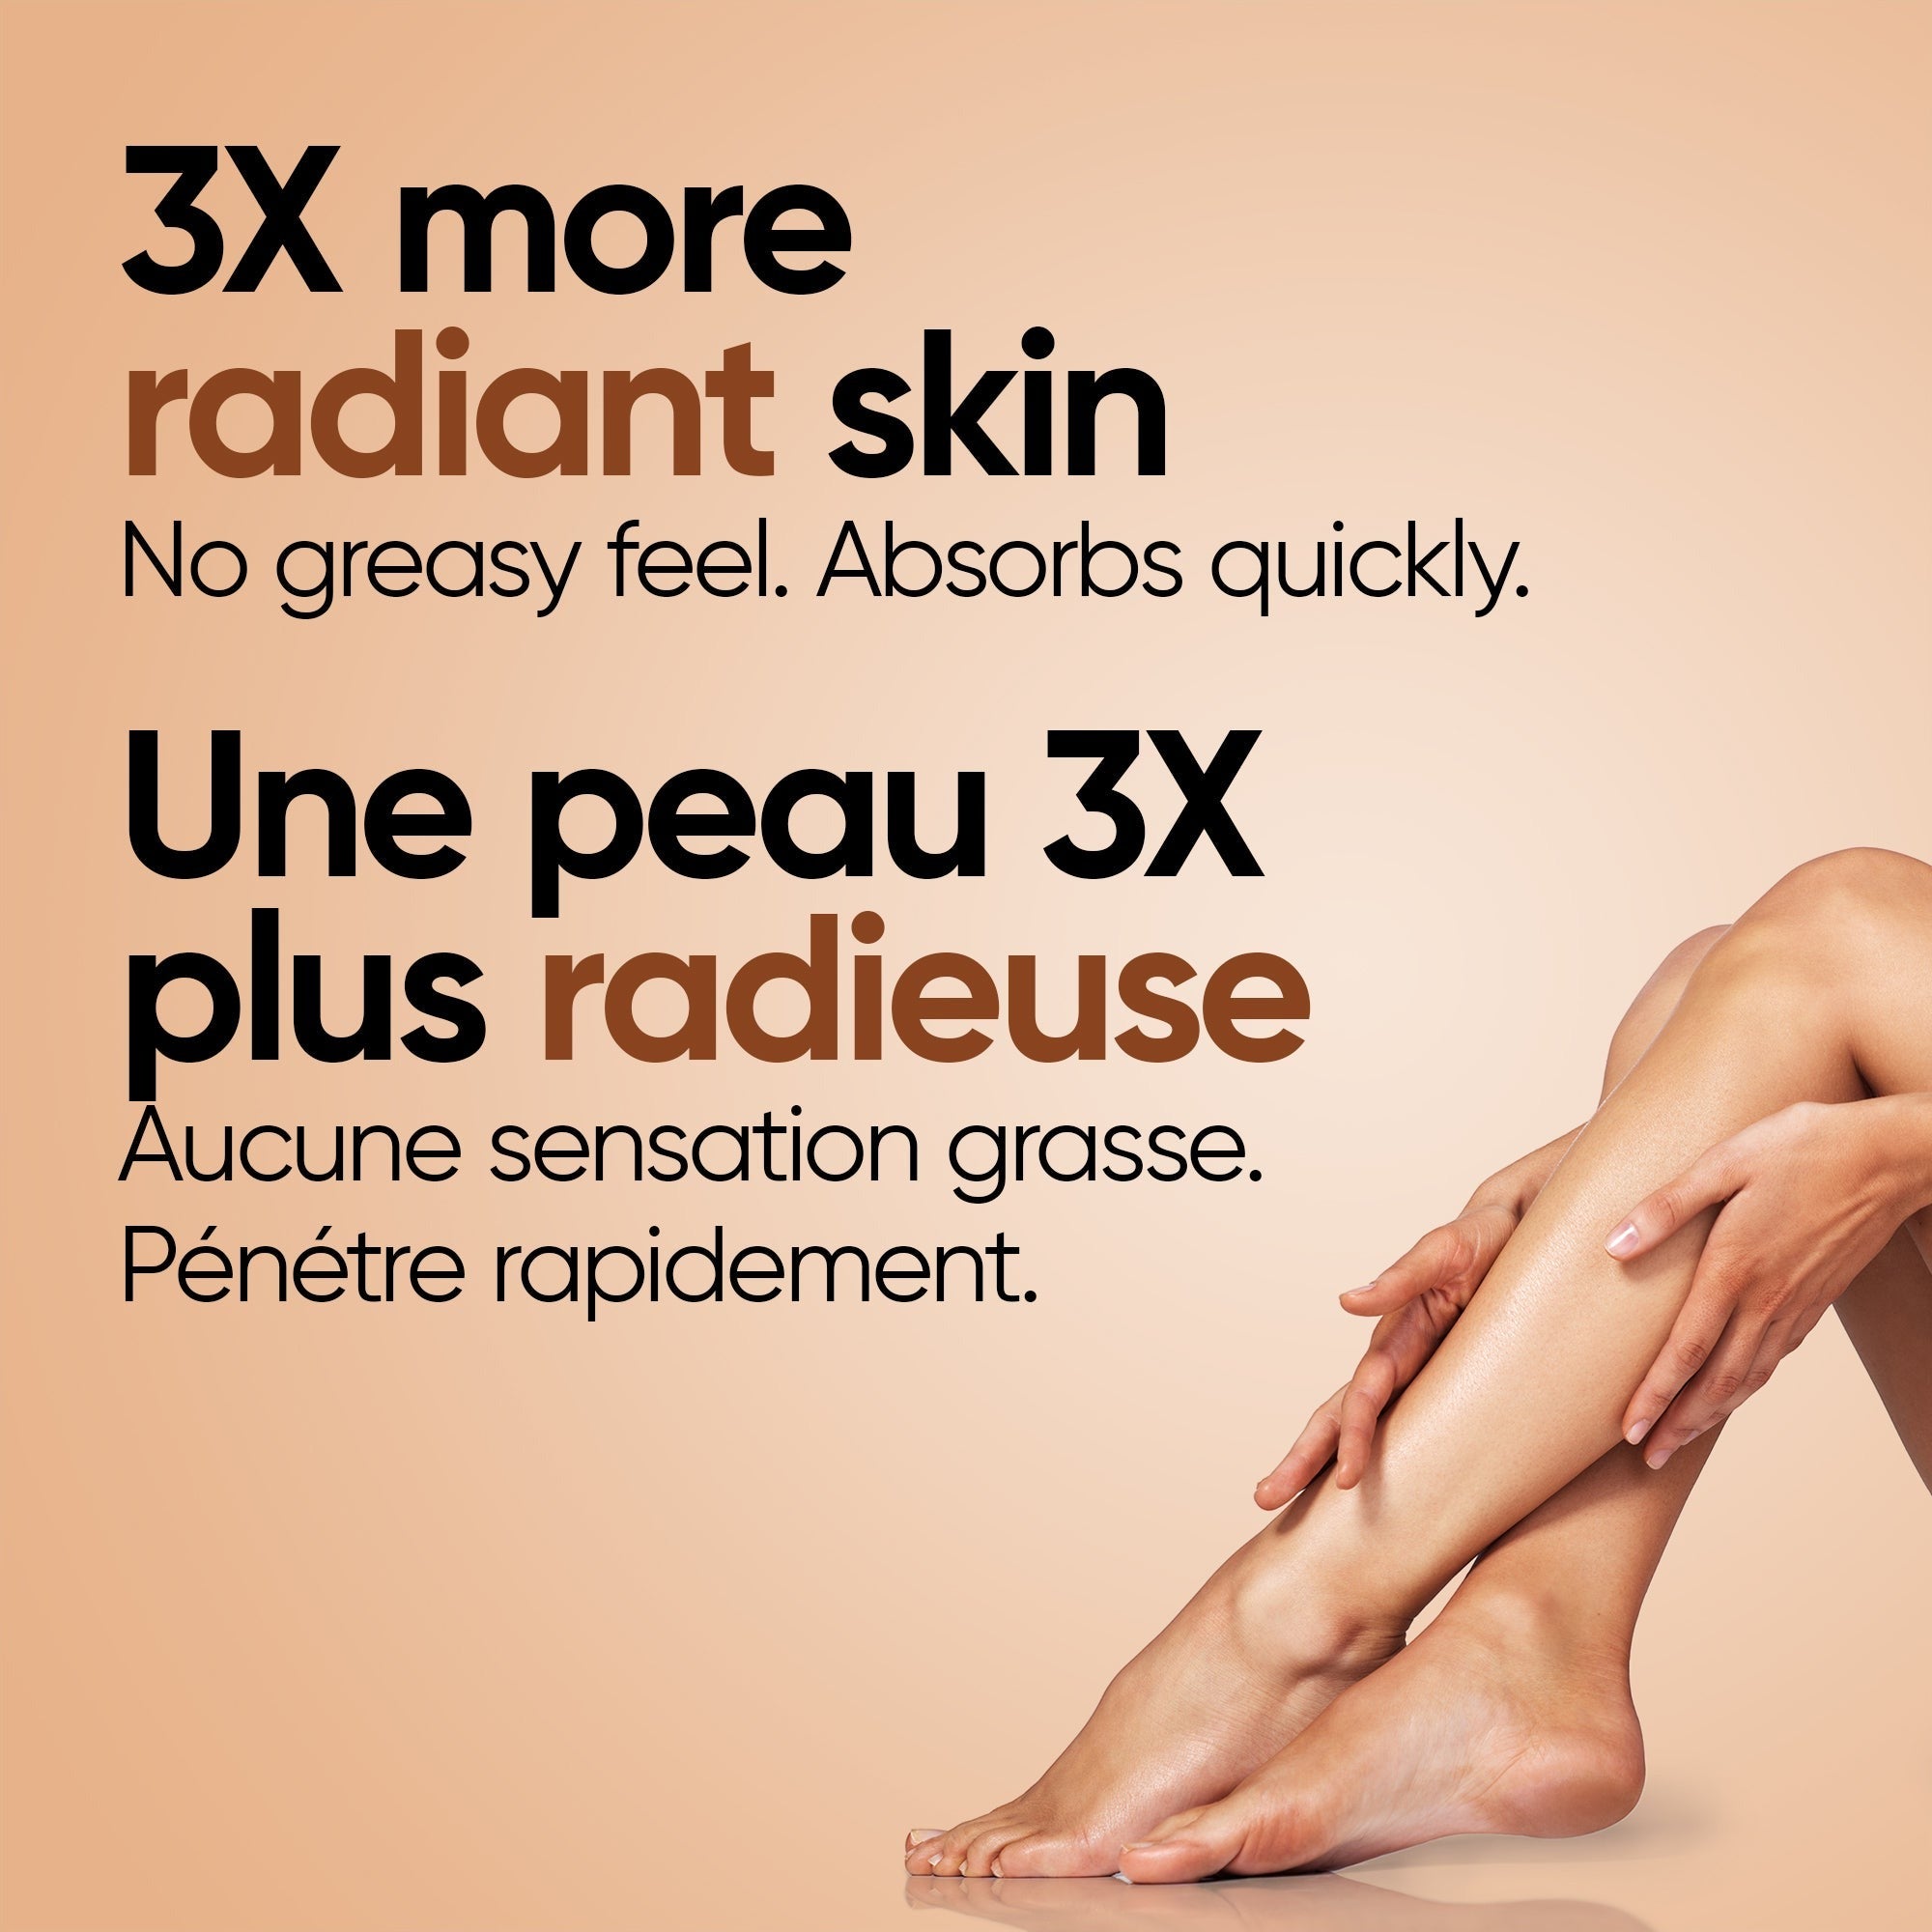 English: 3x more radiant skin no greasy feel. Absorbs quickly Français: Une peau 3x plus radieuse, sans sensation grasse. À absorption rapide